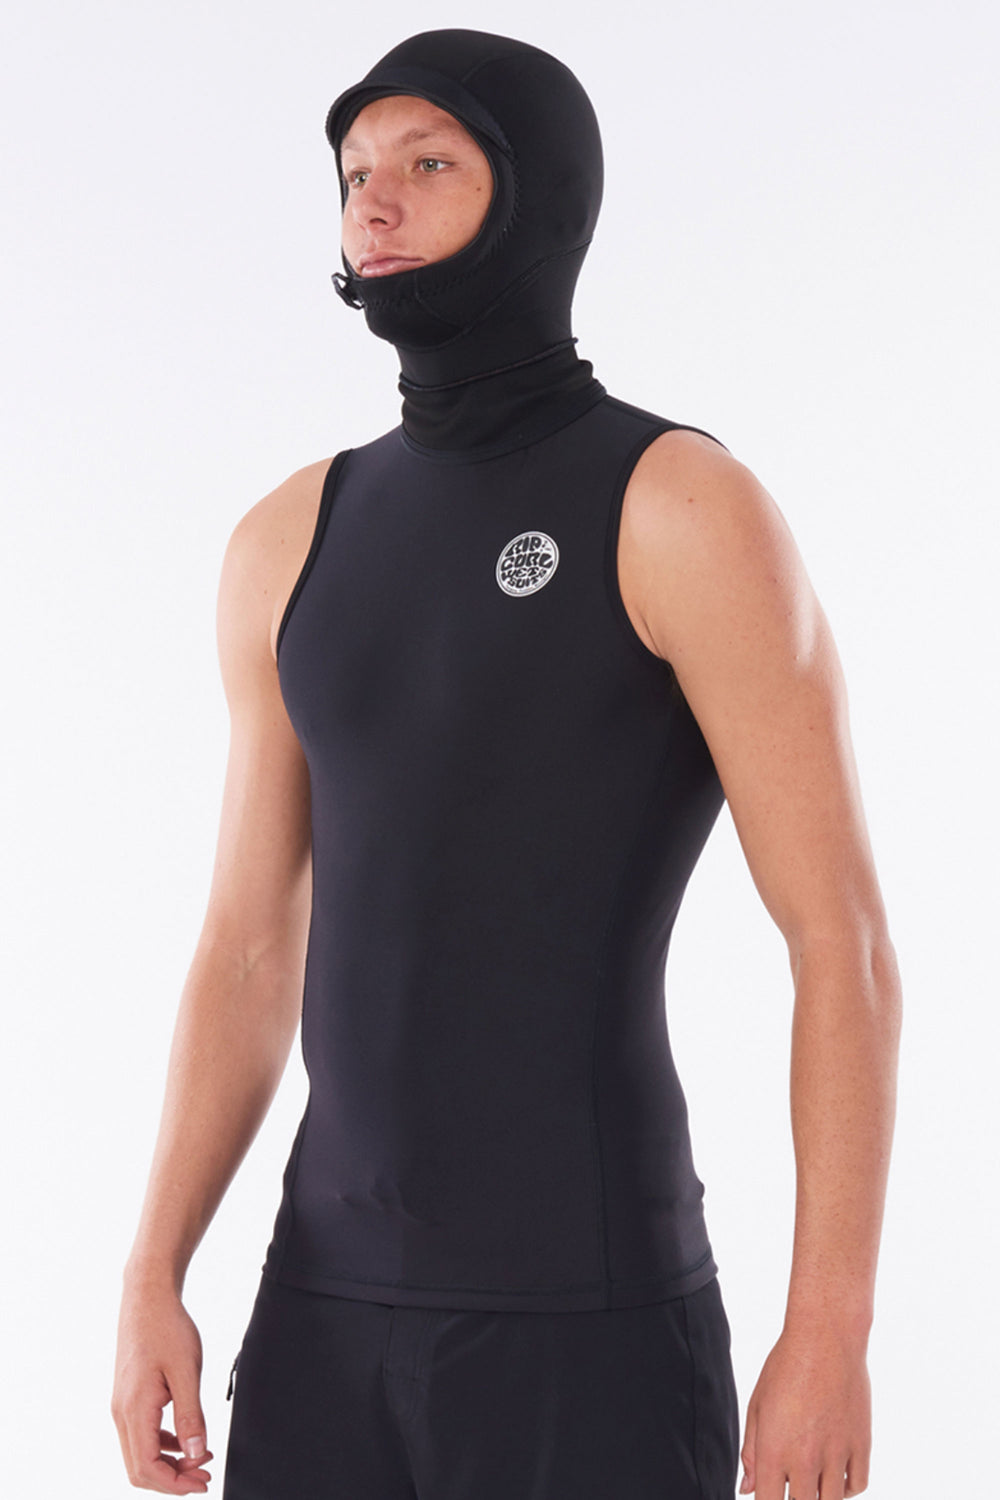    Pukas-Surf-Shop-rip-curl-wetsuit-Flashbomb-Polypro-Hood-Vest